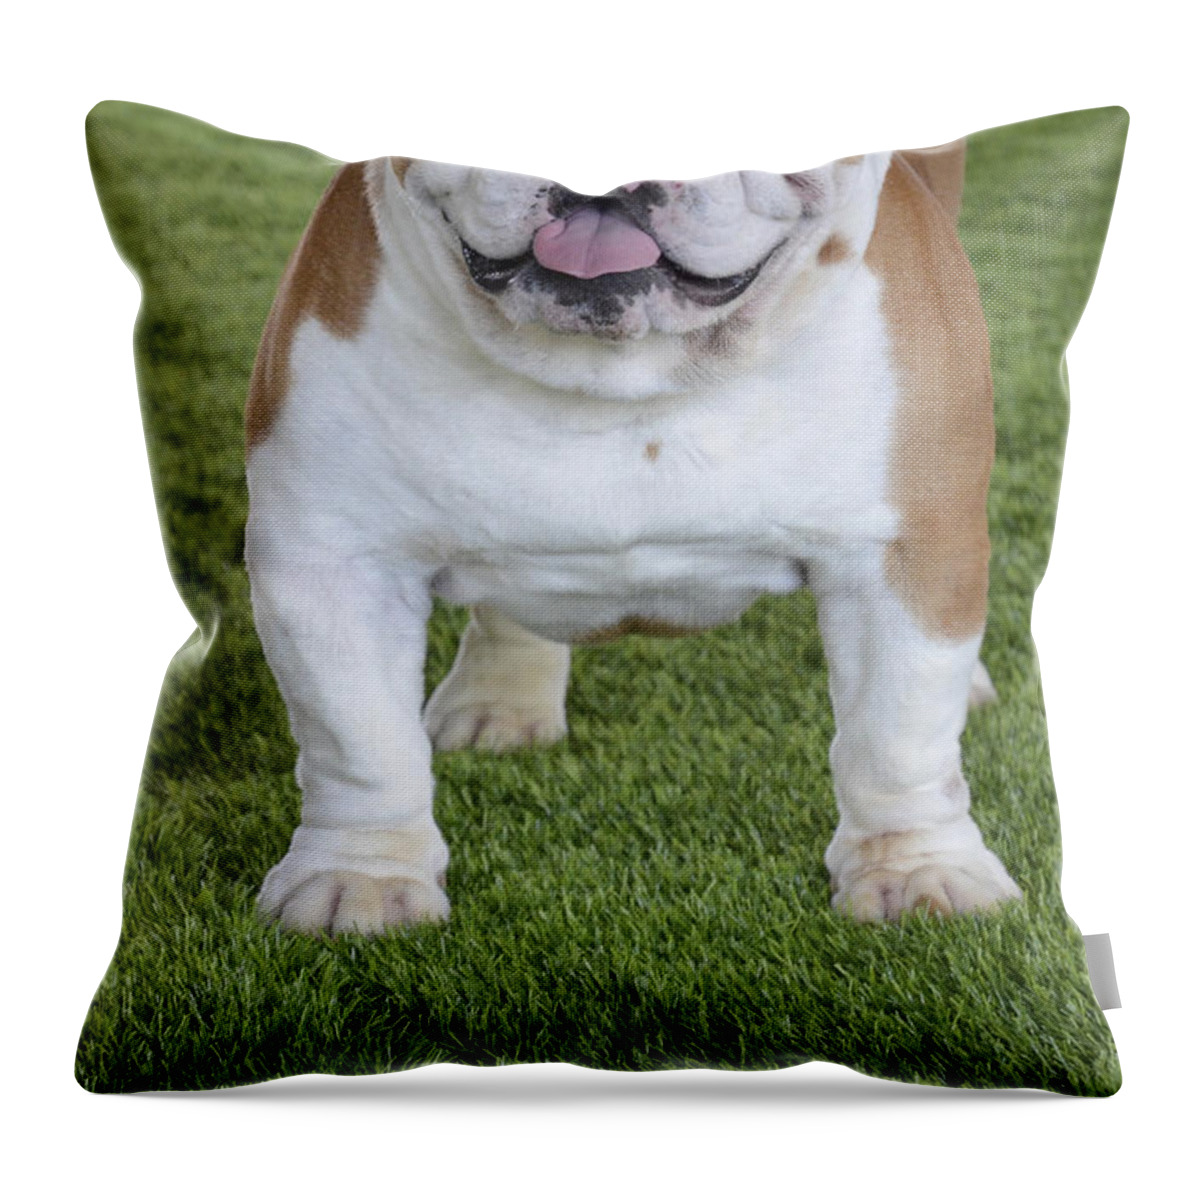 English Bulldog Throw Pillow featuring the photograph English Bulldog #4 by Amir Paz